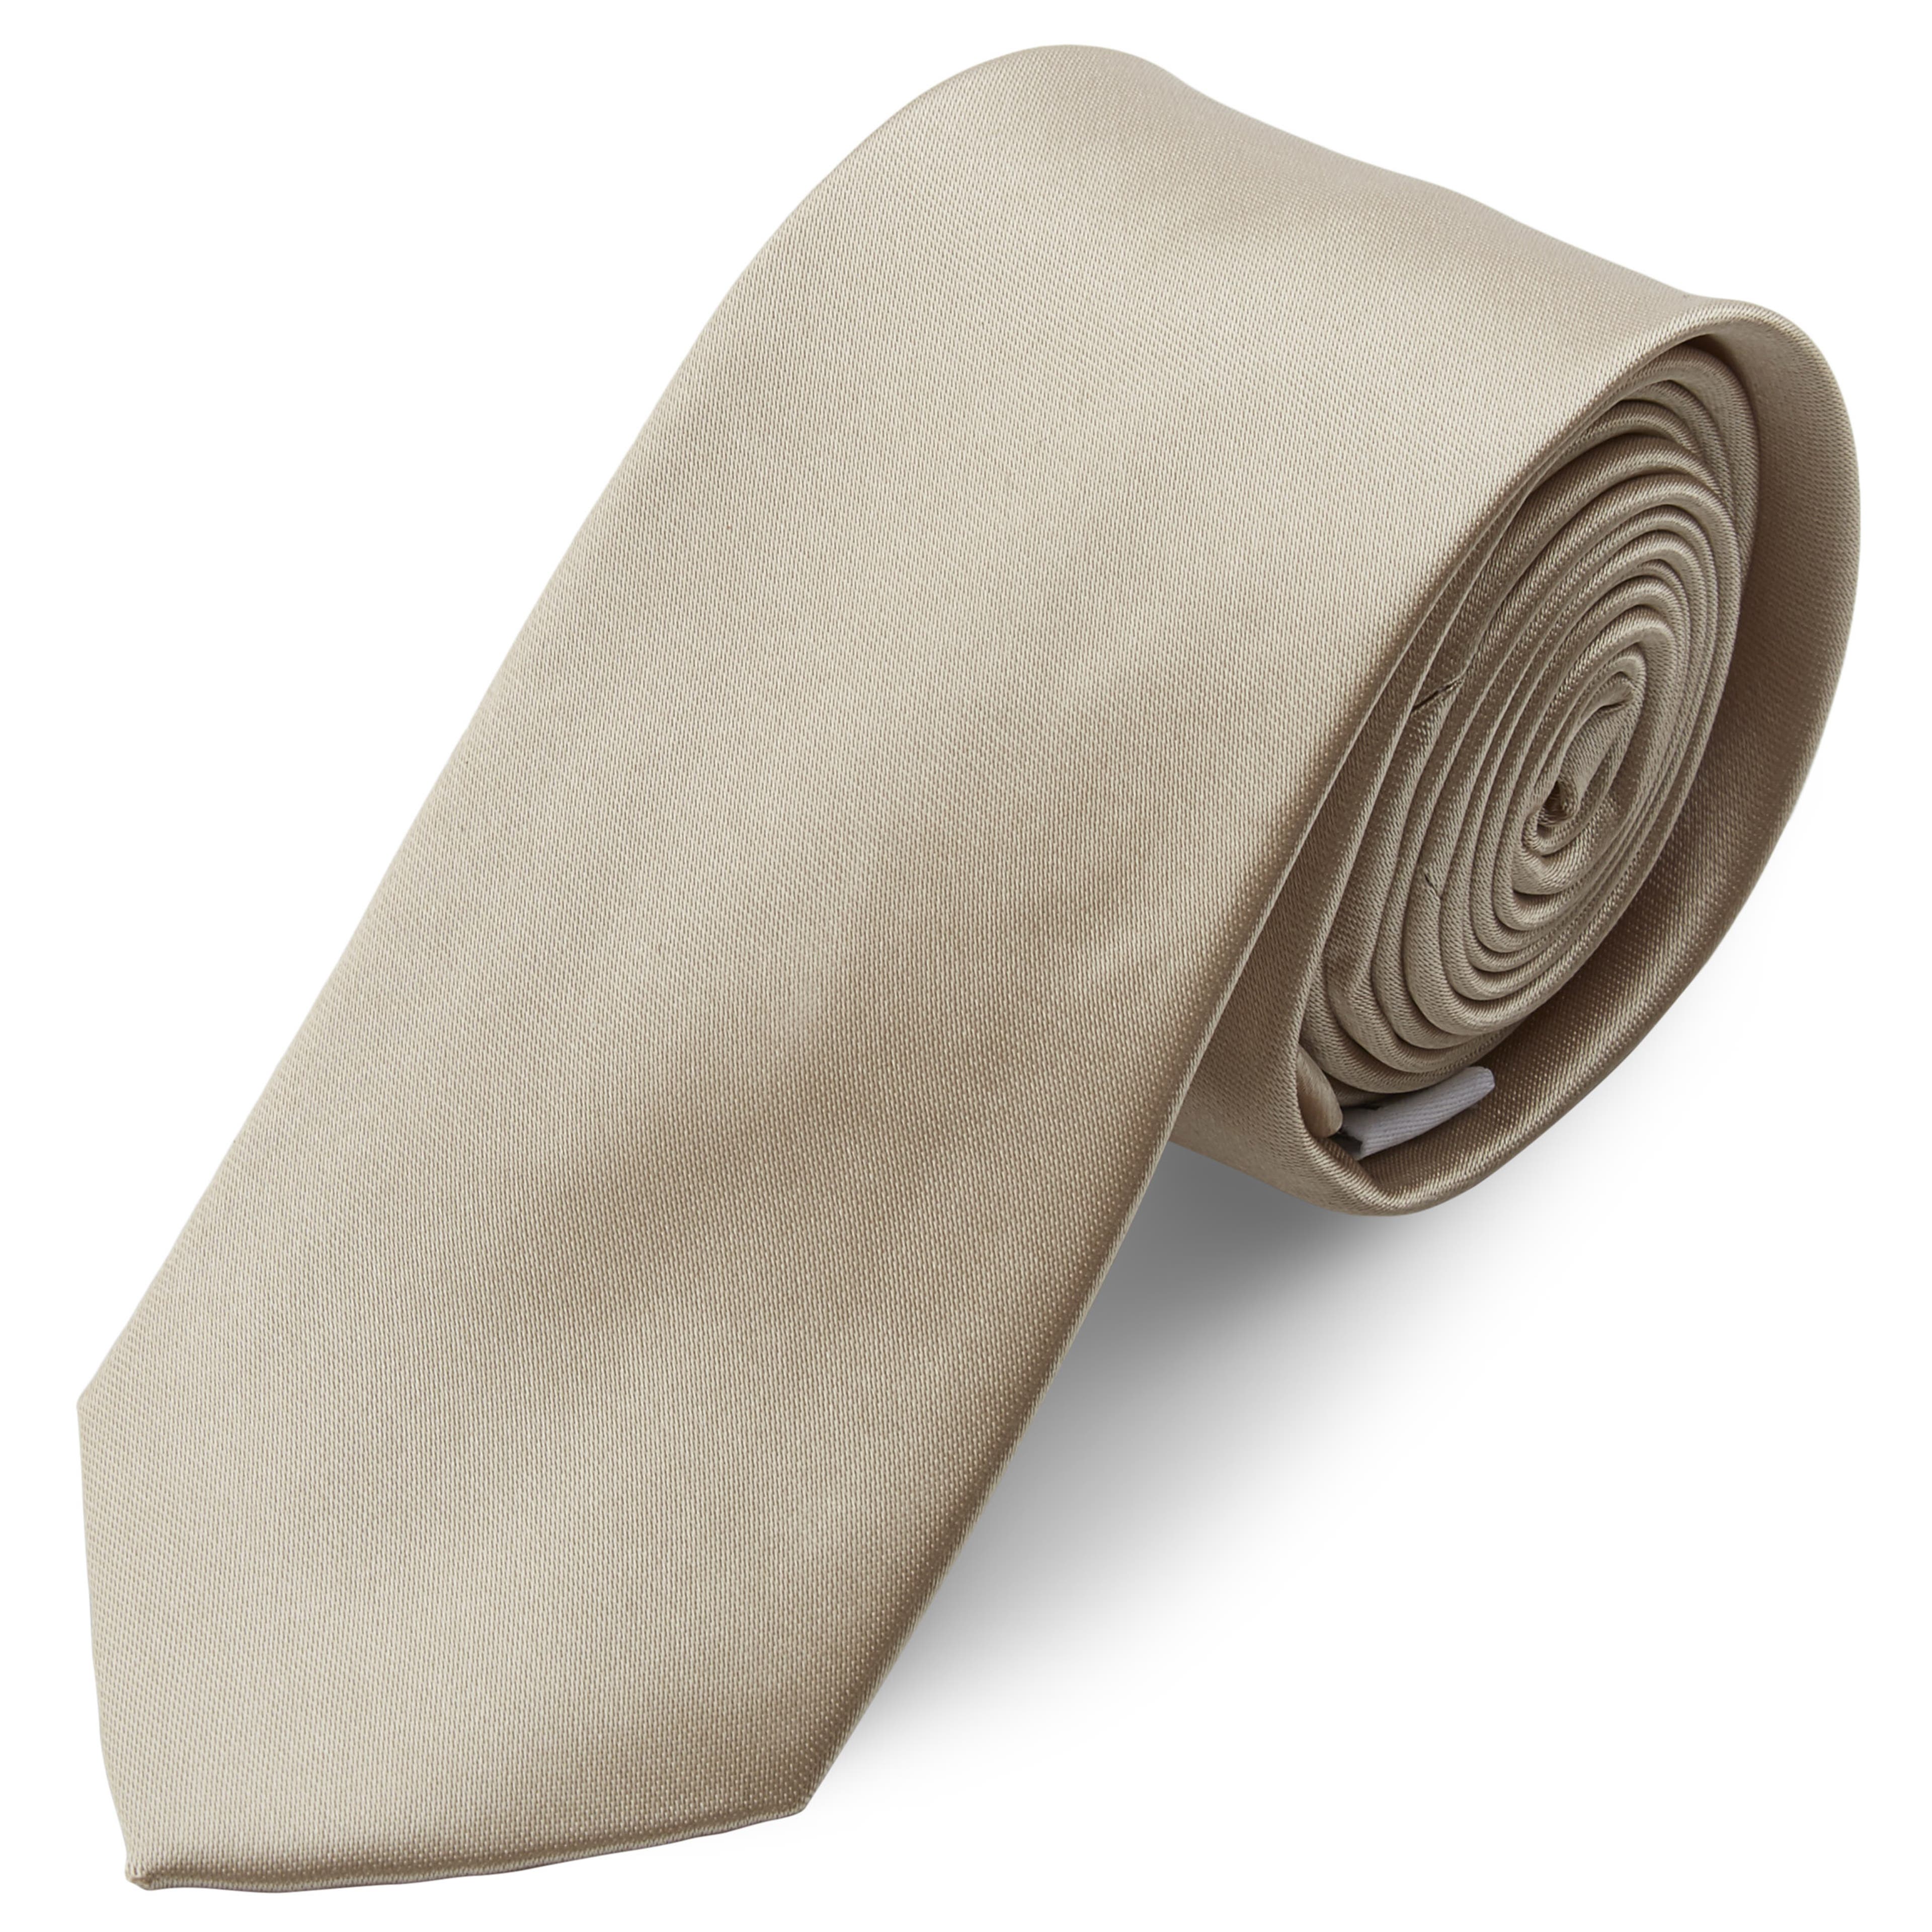 Basic Shiny Champagne Polyester Tie